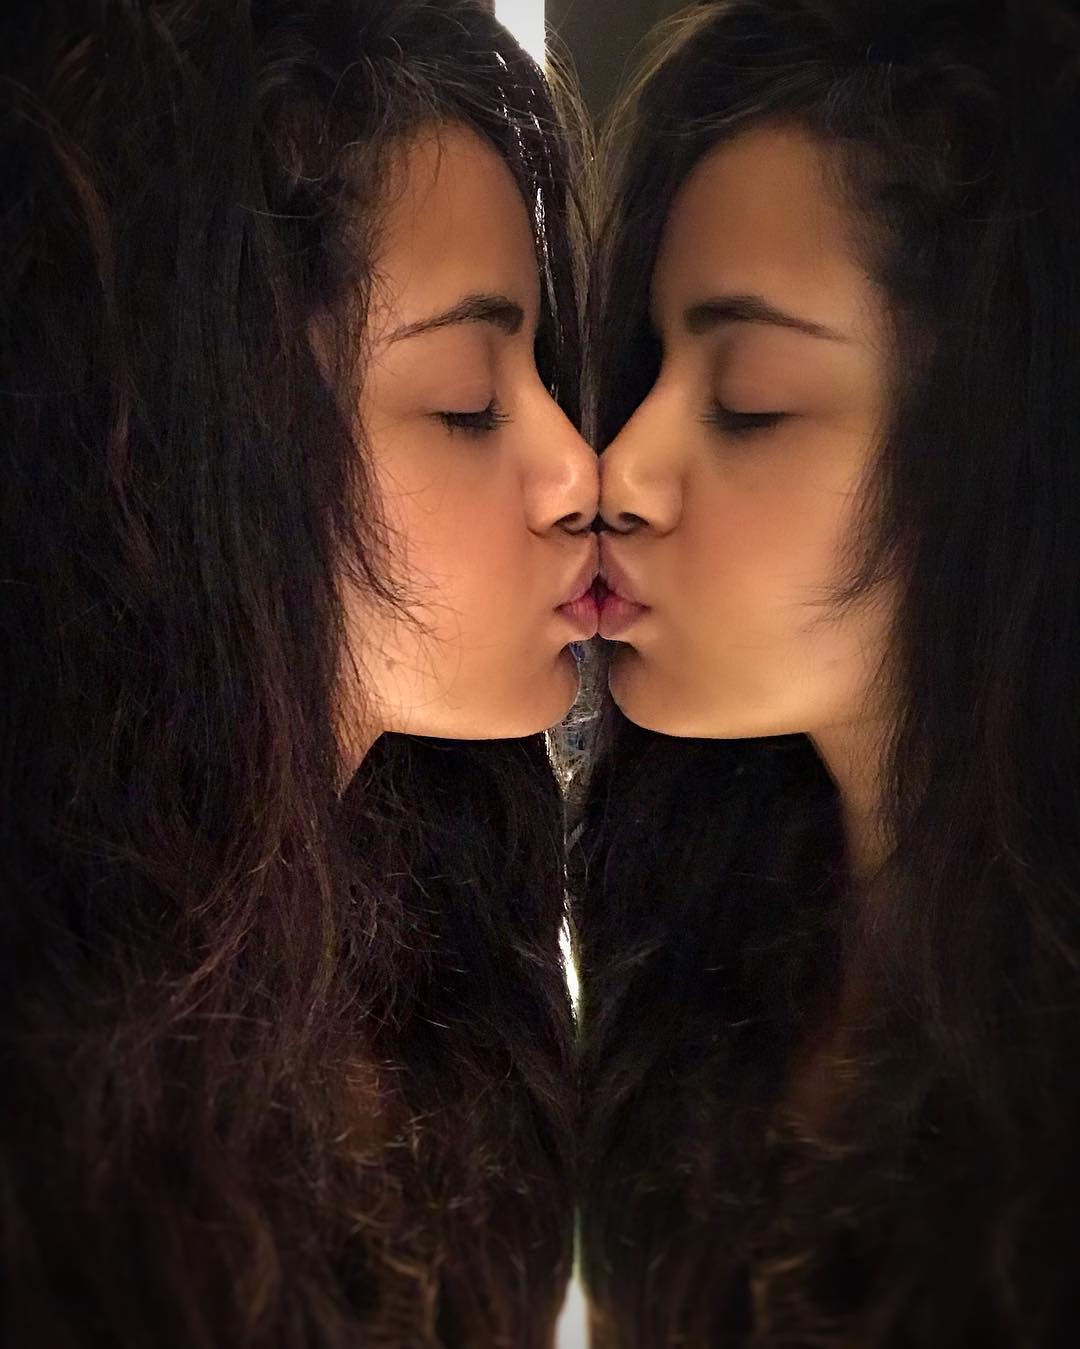 How lesbians. Две девушки любовь. Поцелуй девушек. Девушки целуются. Поцелуй двух девушек.